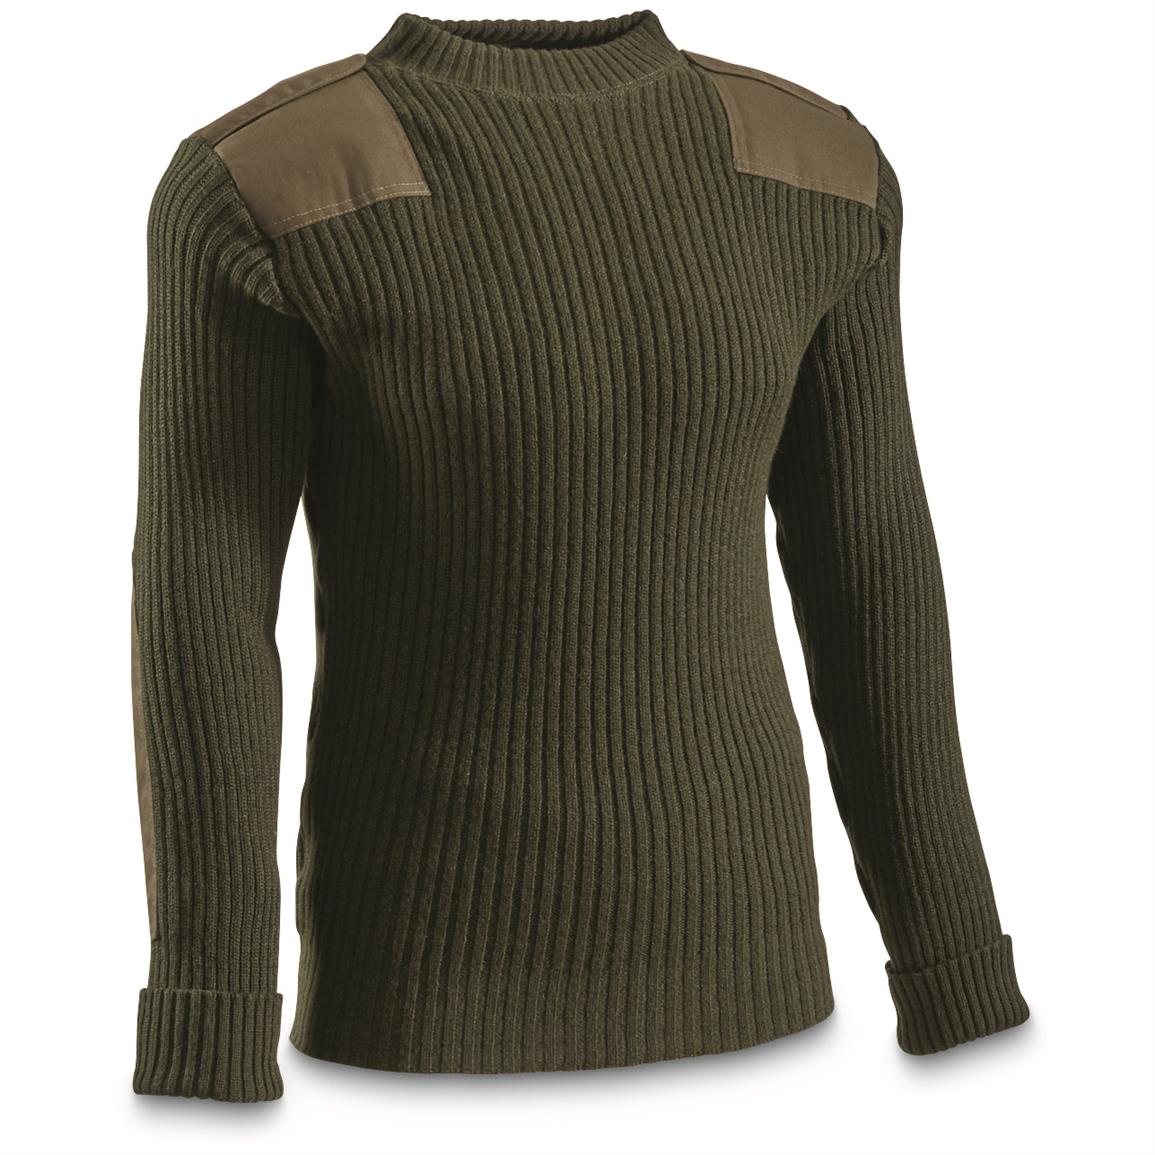 U.S. Military Surplus USMC Wool Sweater, New - 613593, Sweaters at ...